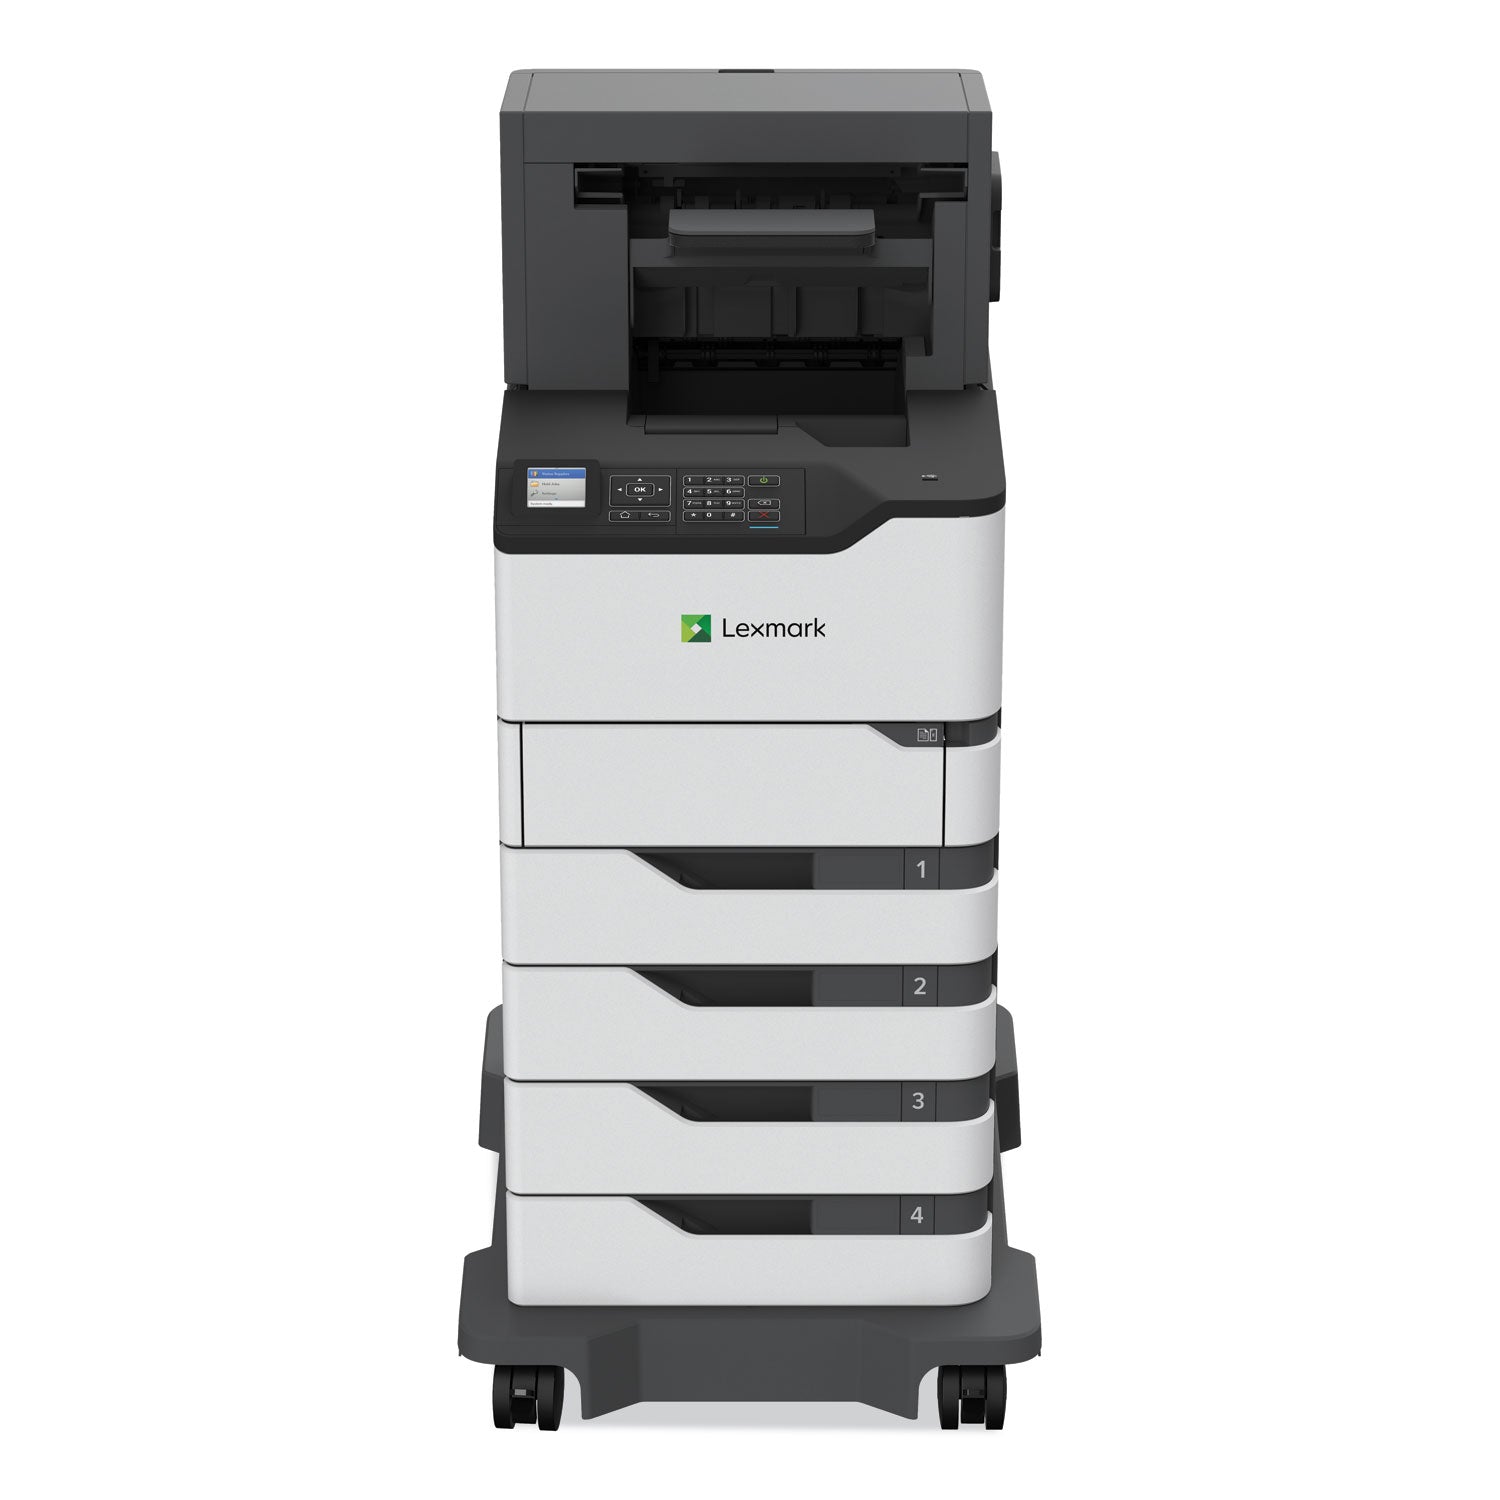 ms821n-laser-printer_lex50g0050 - 3